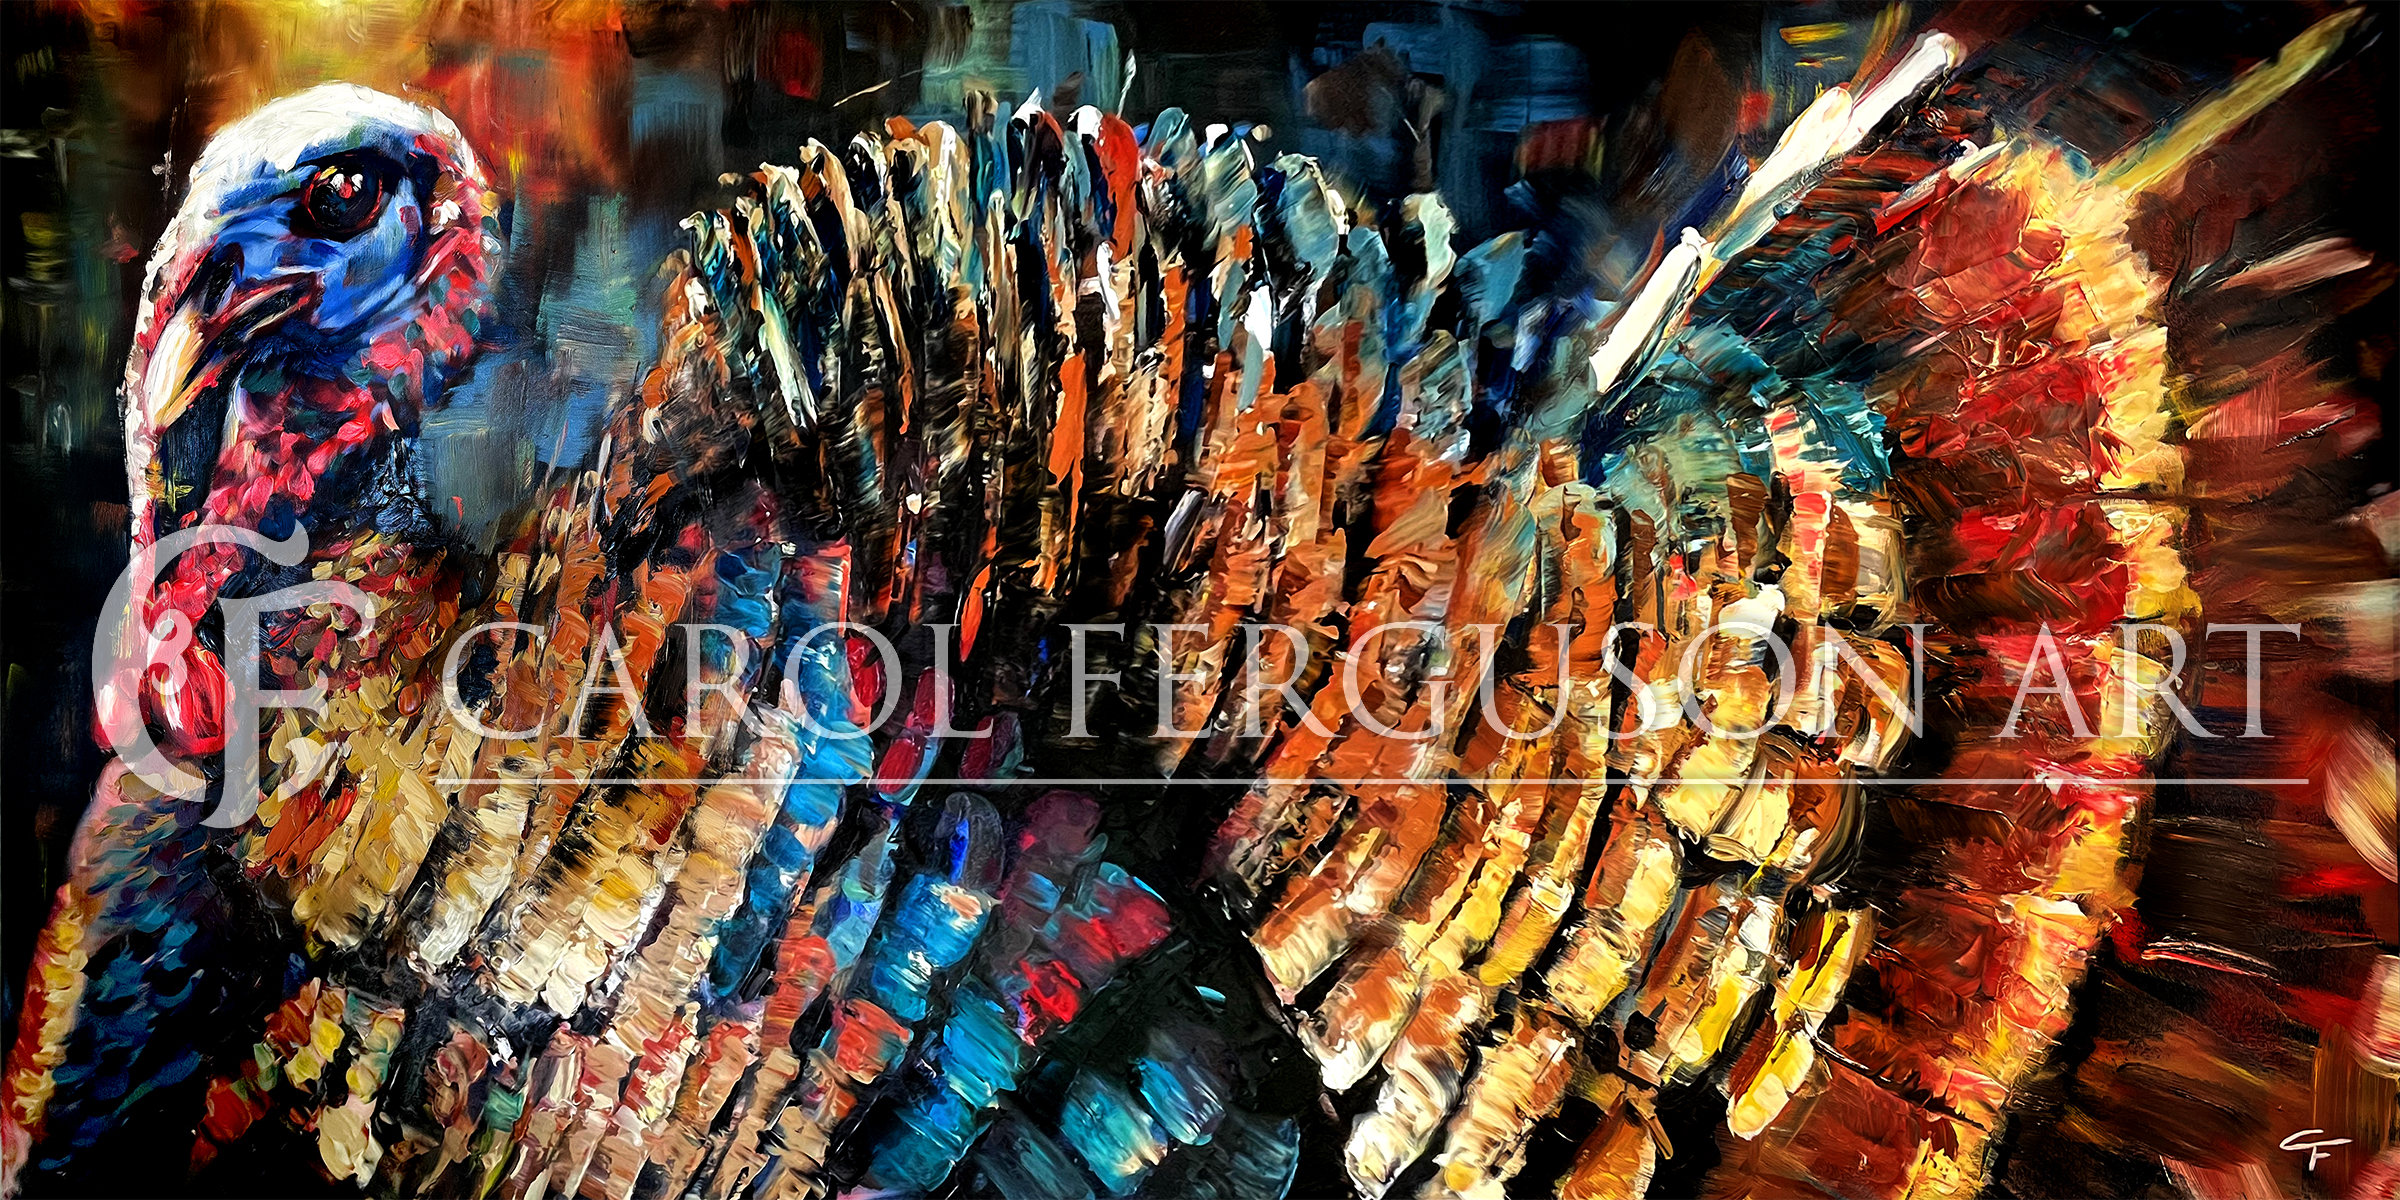 Al Wildlife Federation Wild Turkey Oil Painting by Carol Ferguson Art Wetumka Al Kelly Art Show 2023